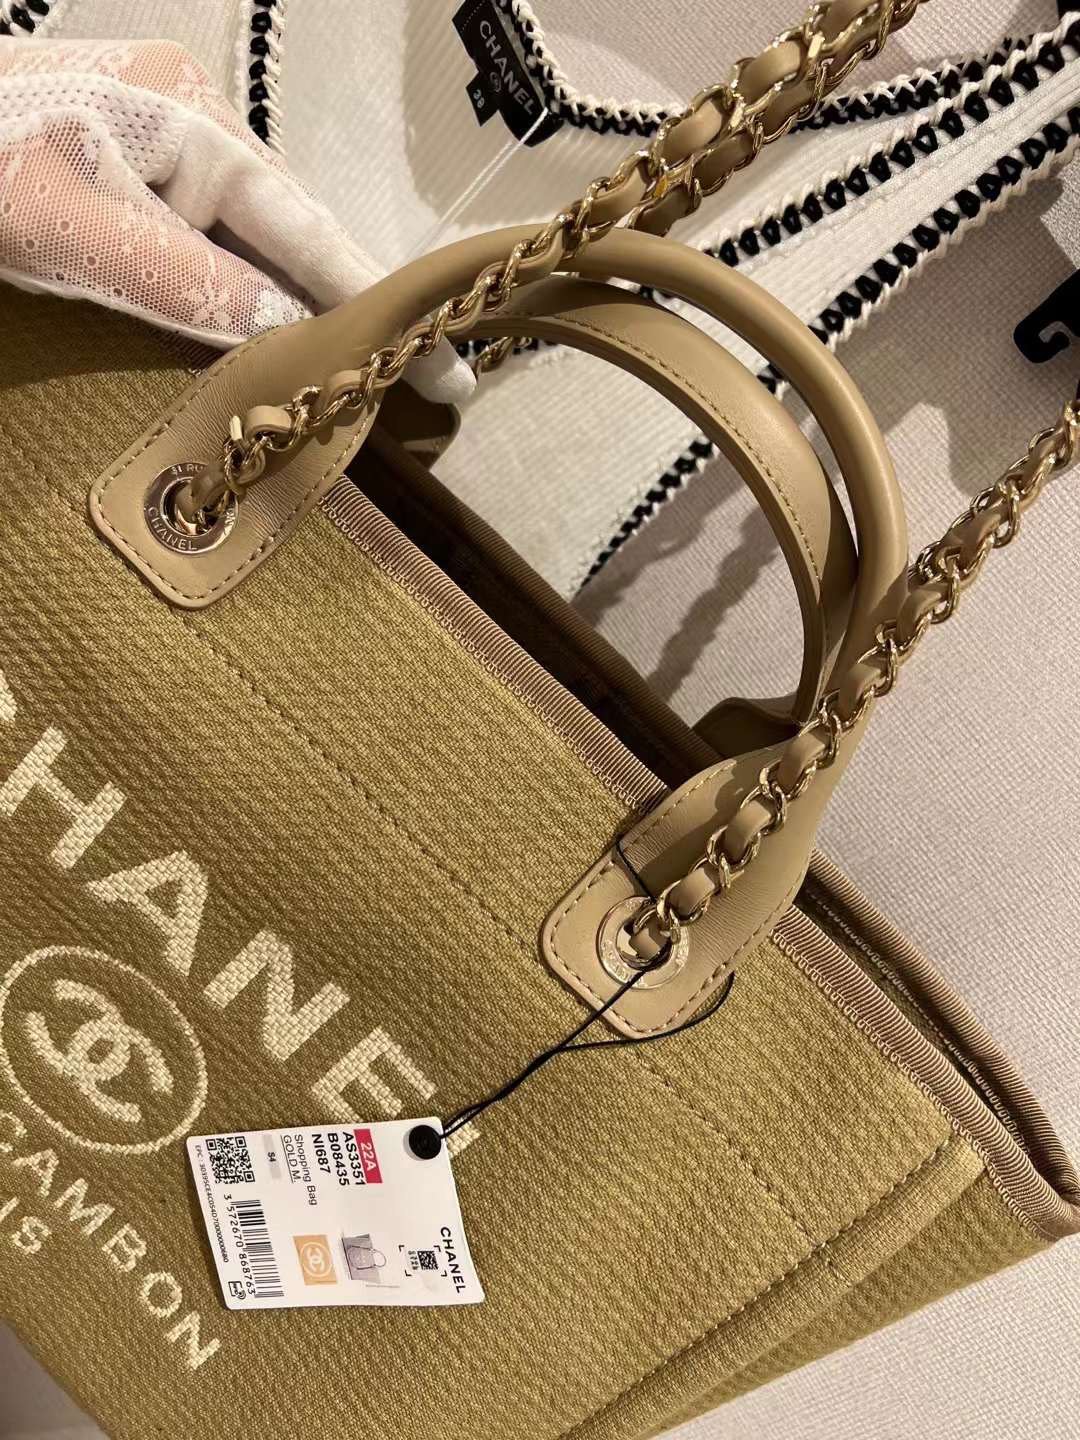 【P1280】香奈儿包包批发 Chanel新款麻布配小羊皮手提包购物袋 姜黄色